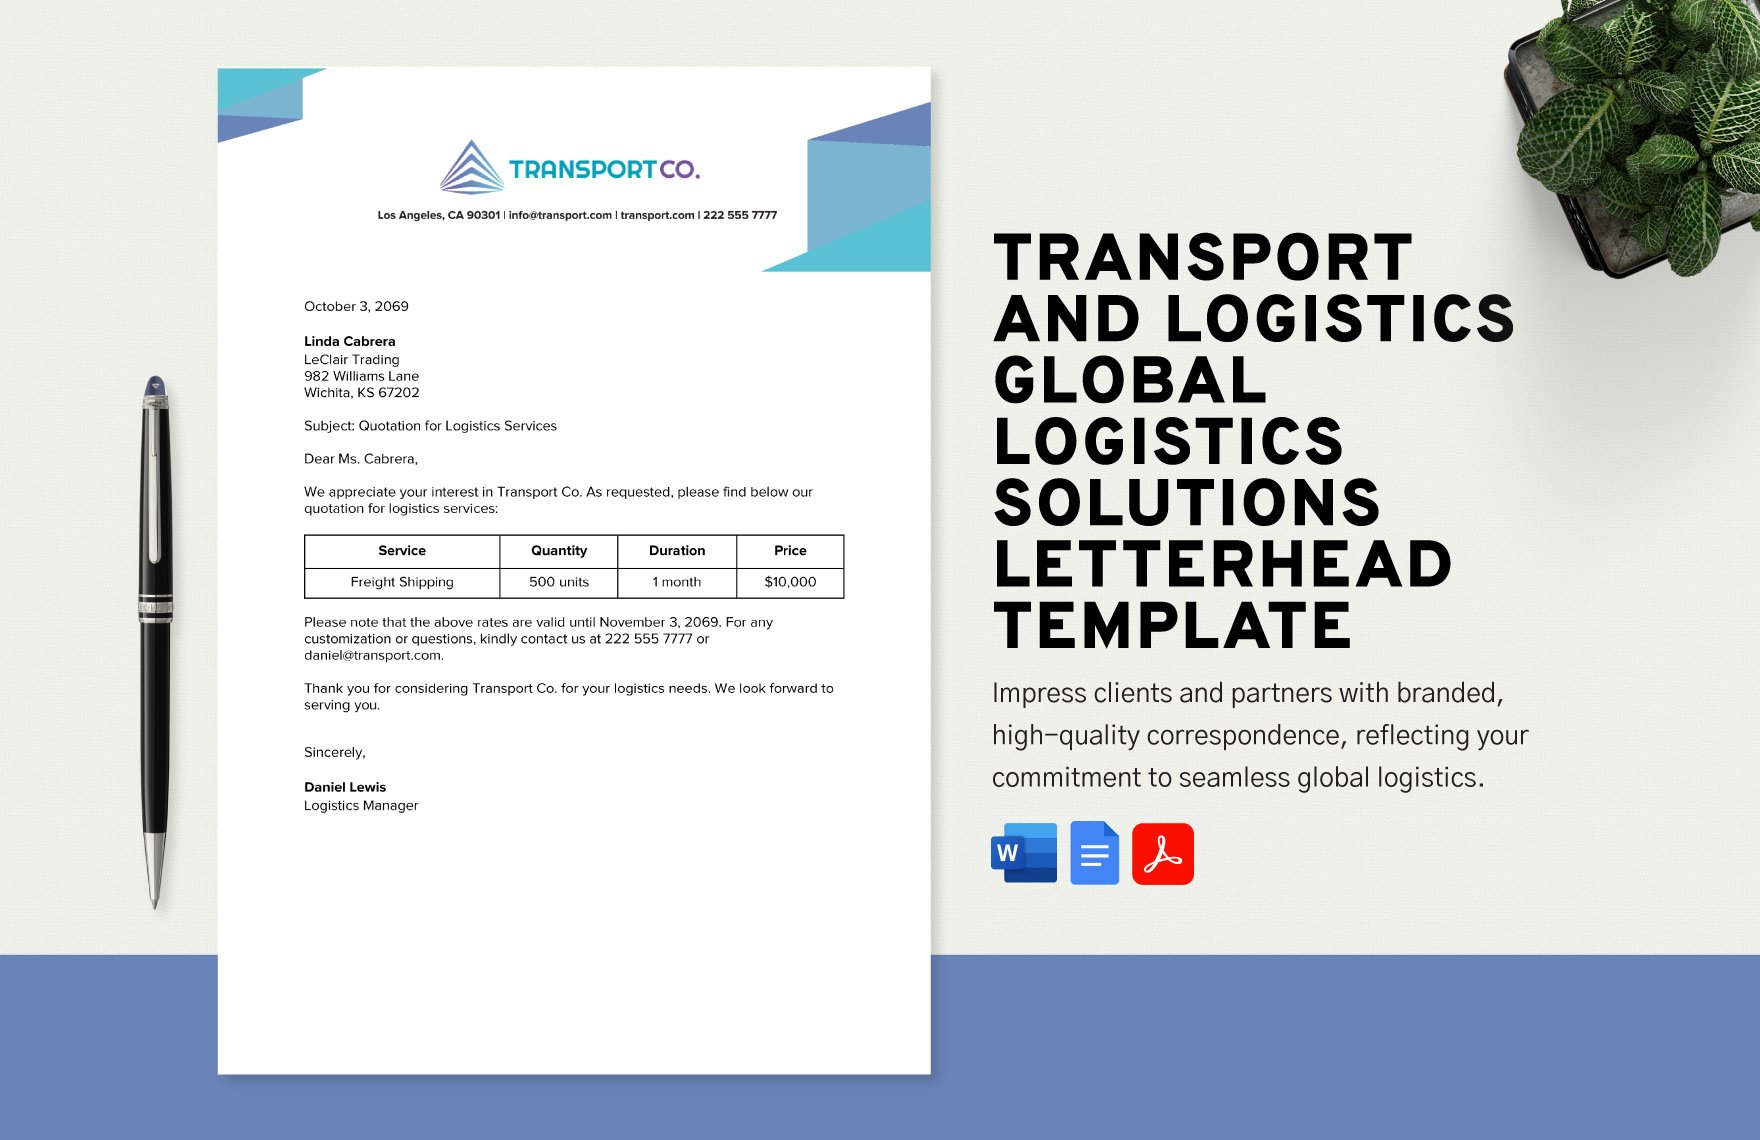 Transport and Logistics Global Logistics Solutions Letterhead Template